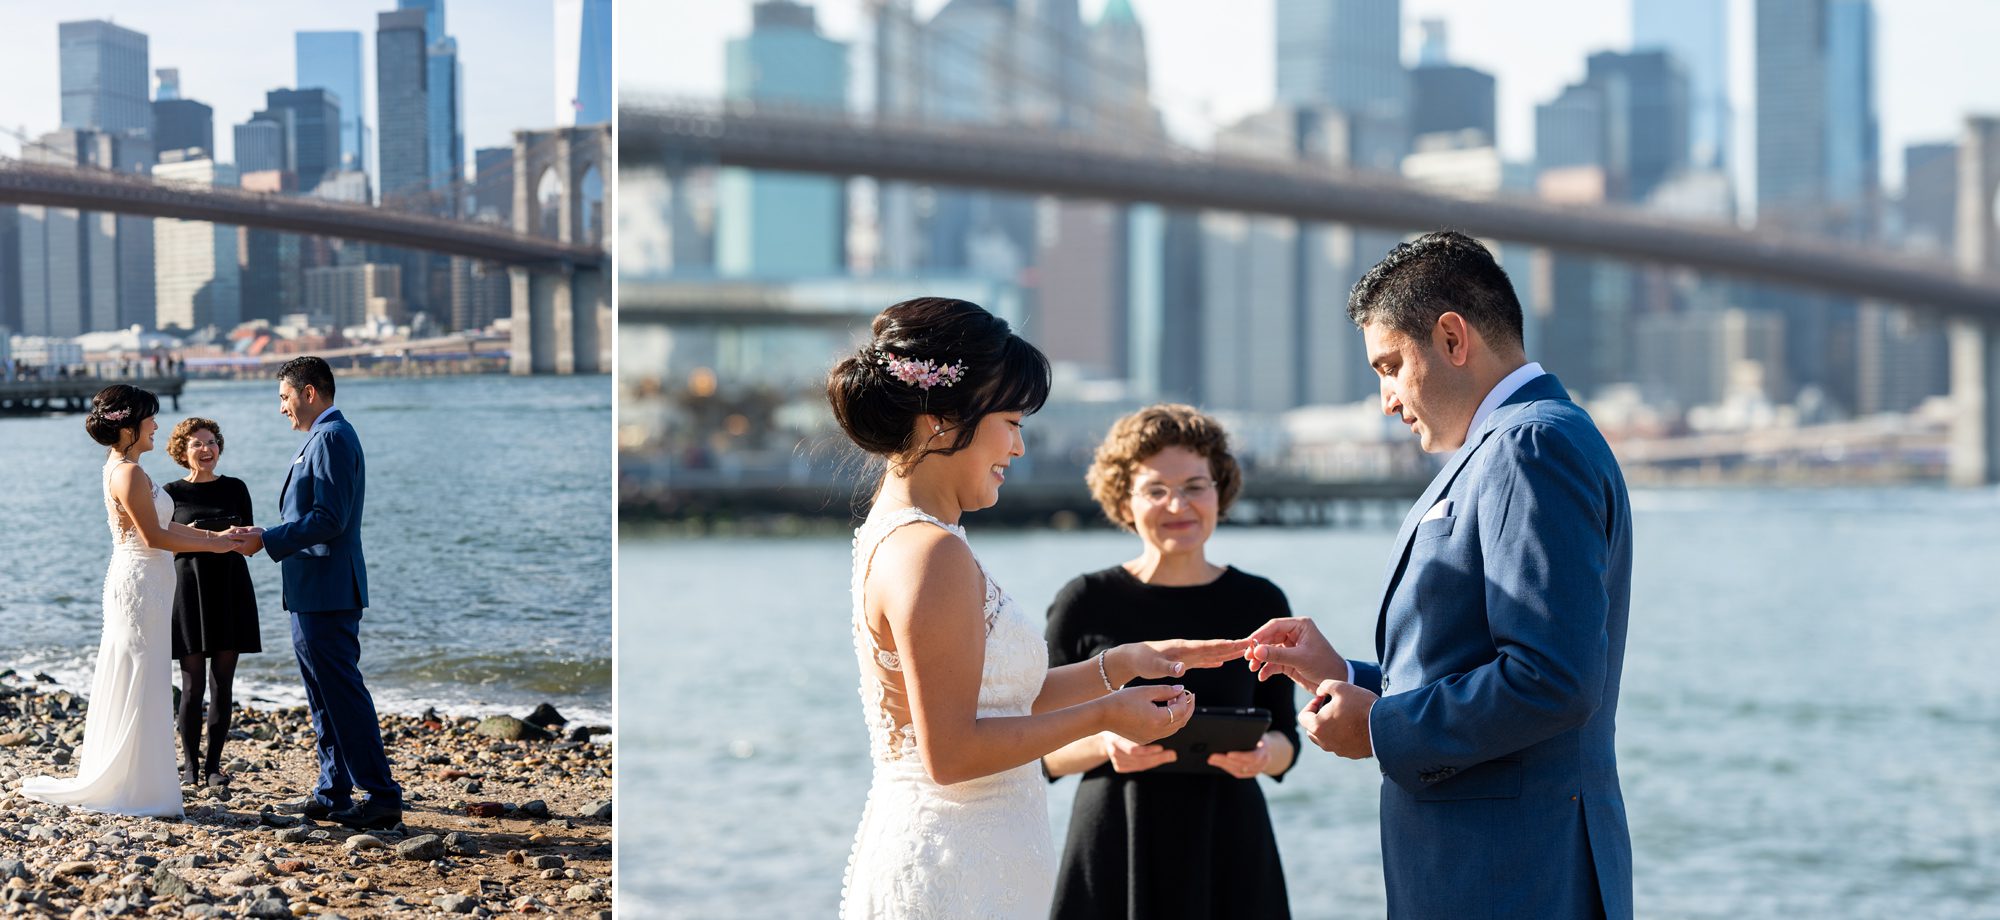 Brooklyn Bridge Park Wedding Locations 